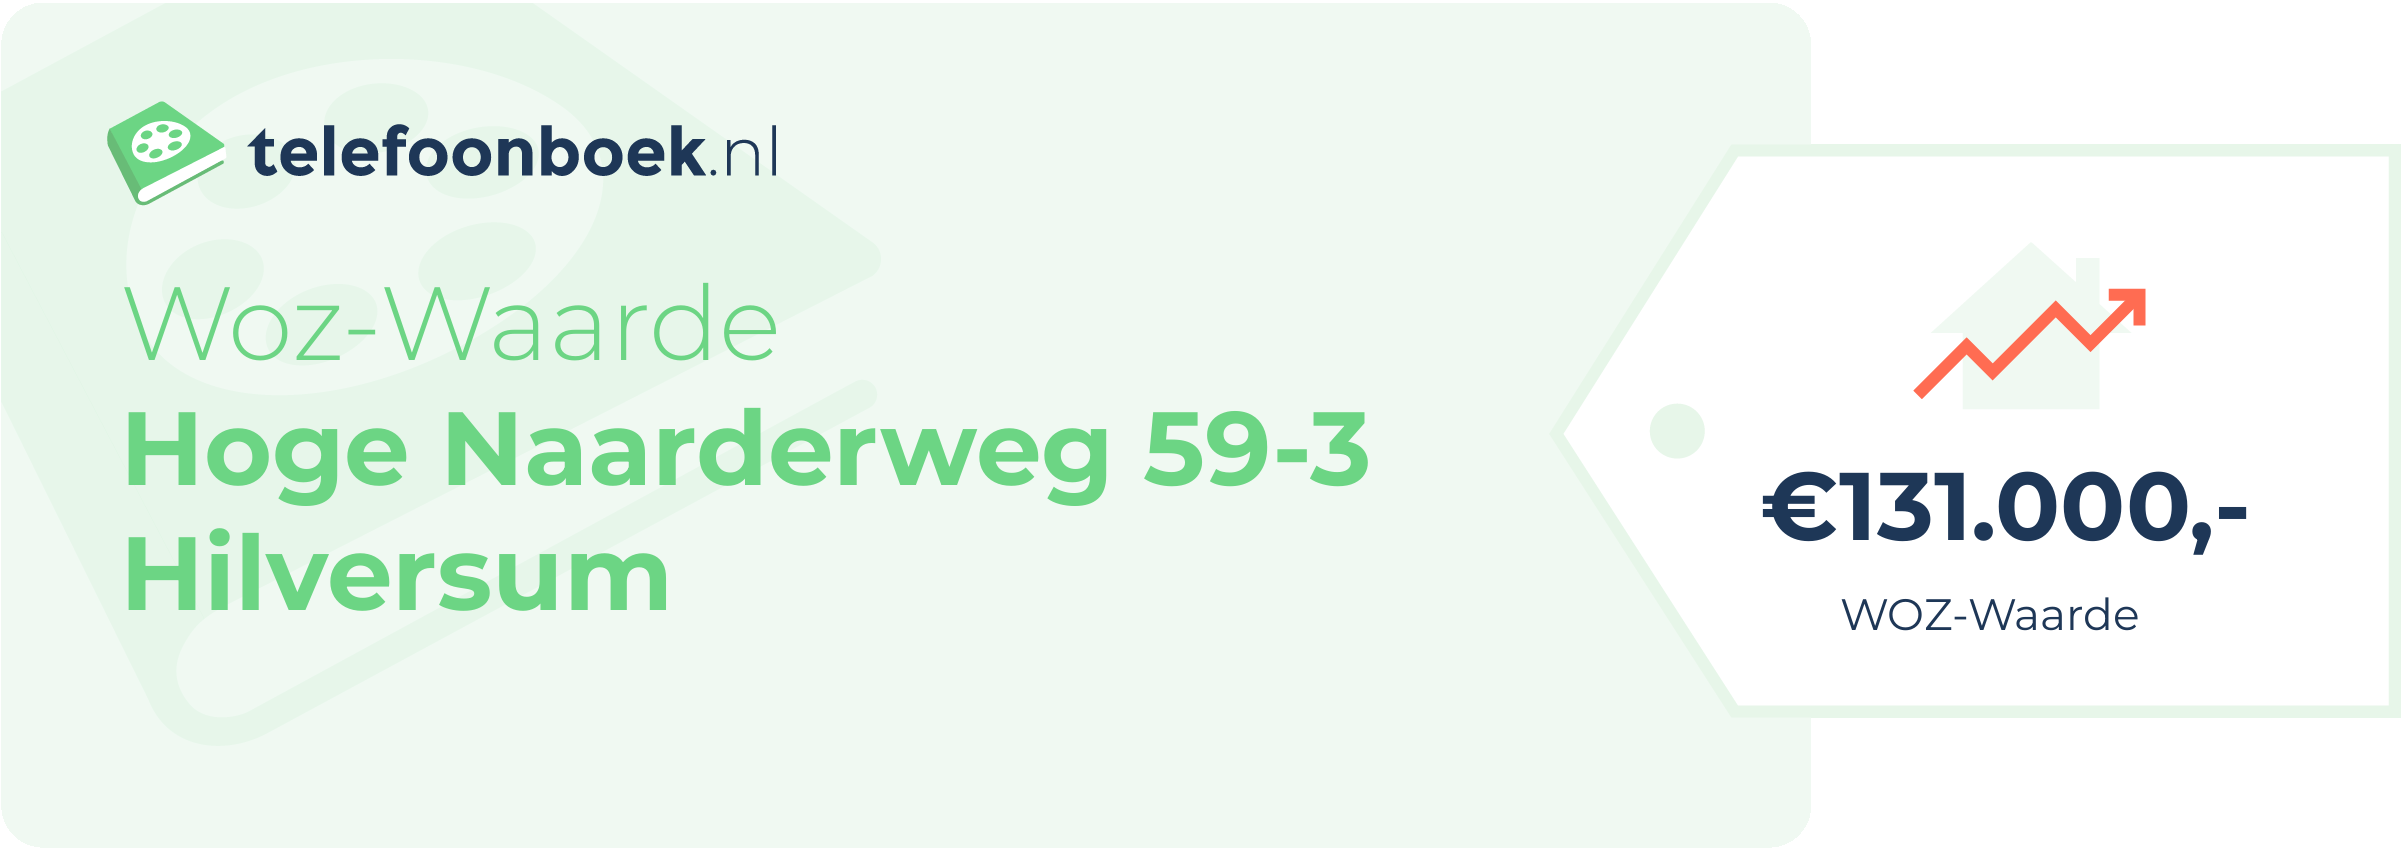 WOZ-waarde Hoge Naarderweg 59-3 Hilversum